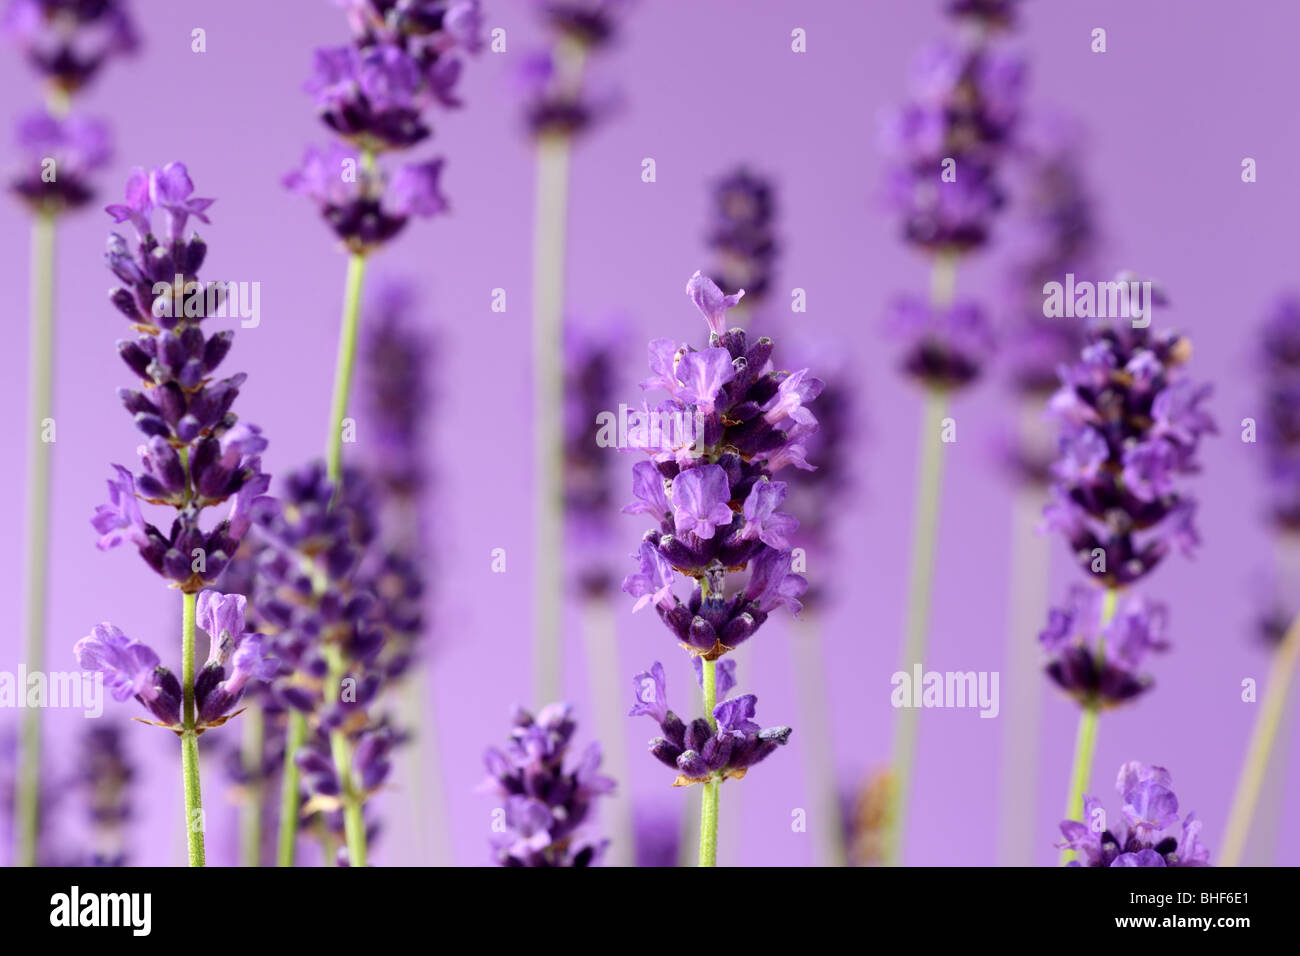 Spikes of purple lavender flowers on purple background. Stock Photo